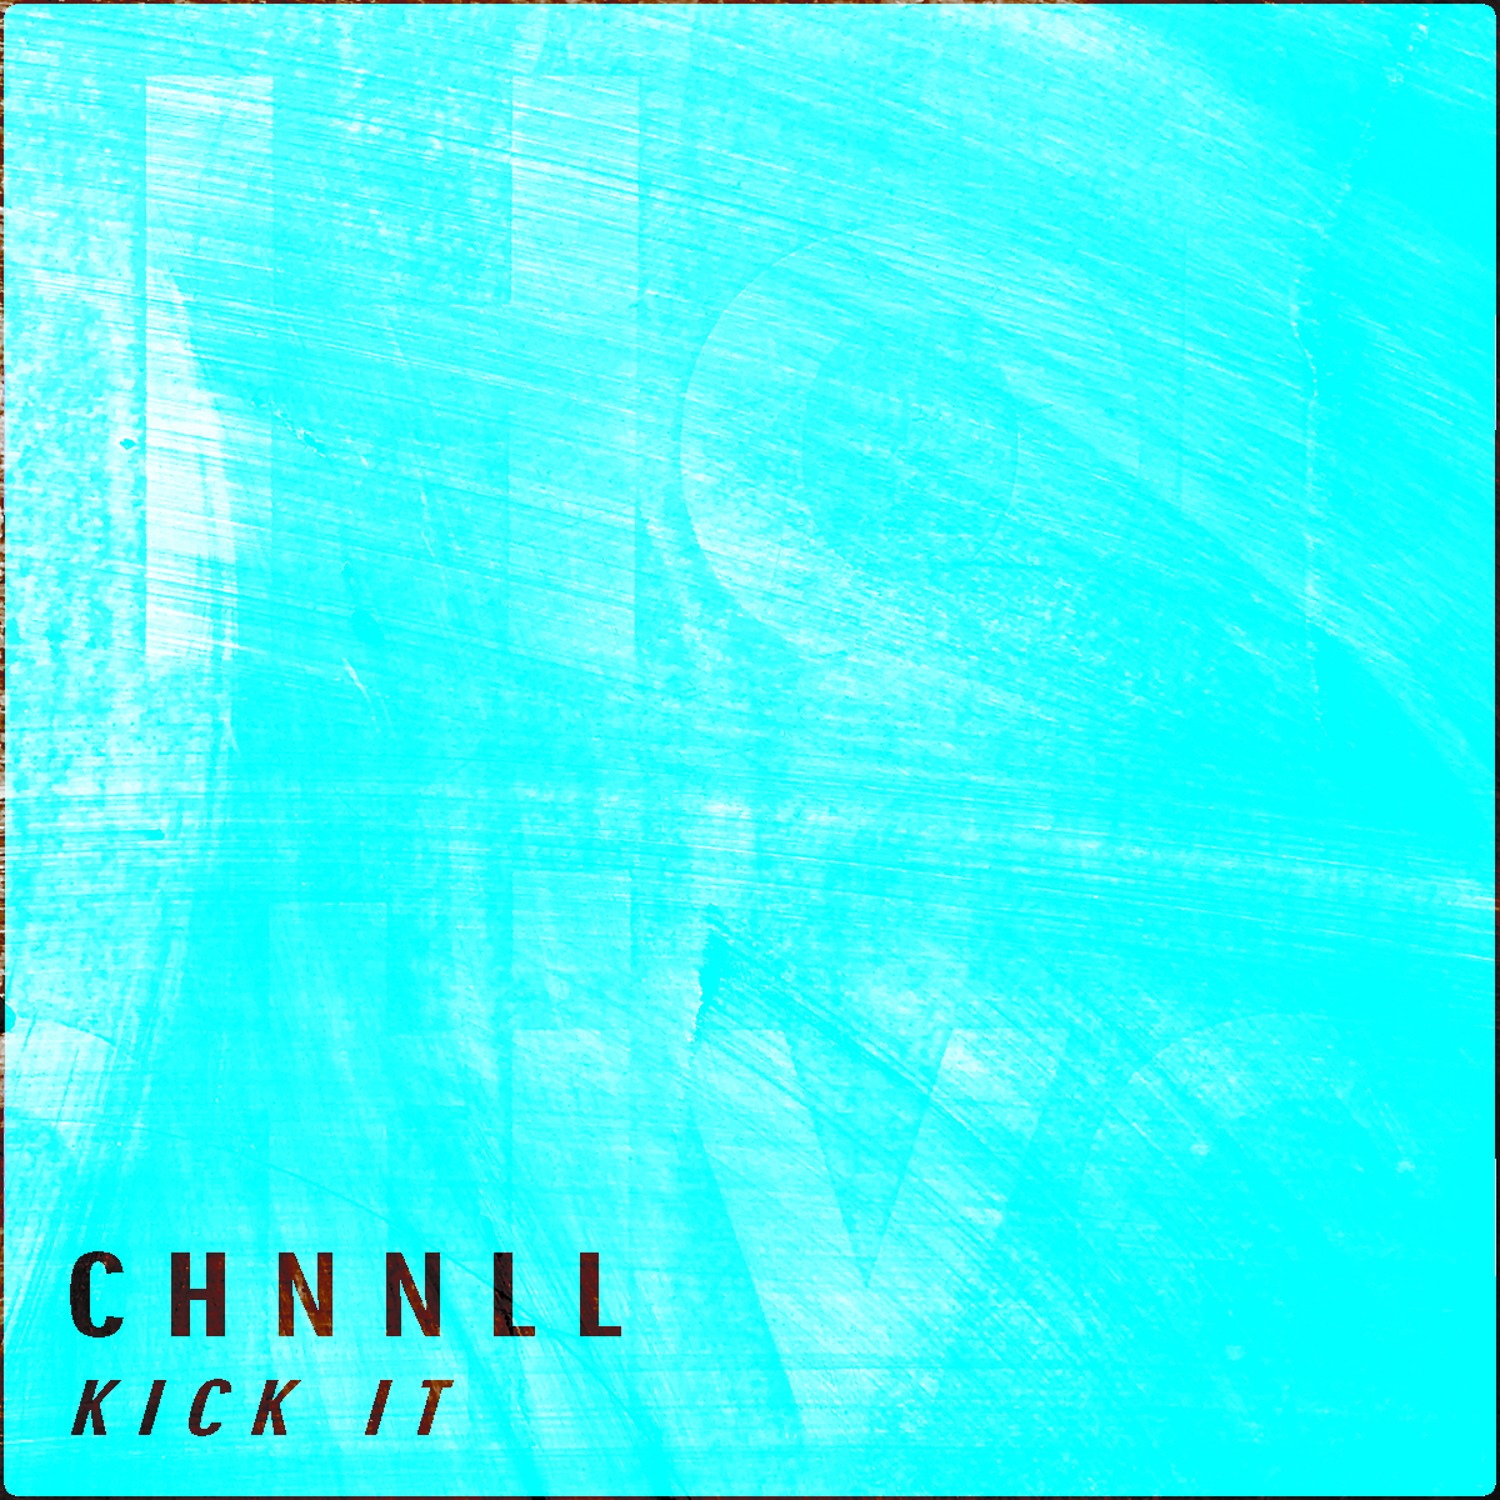 CHNNLL “Kick It” single artwork, by havsum.pudding